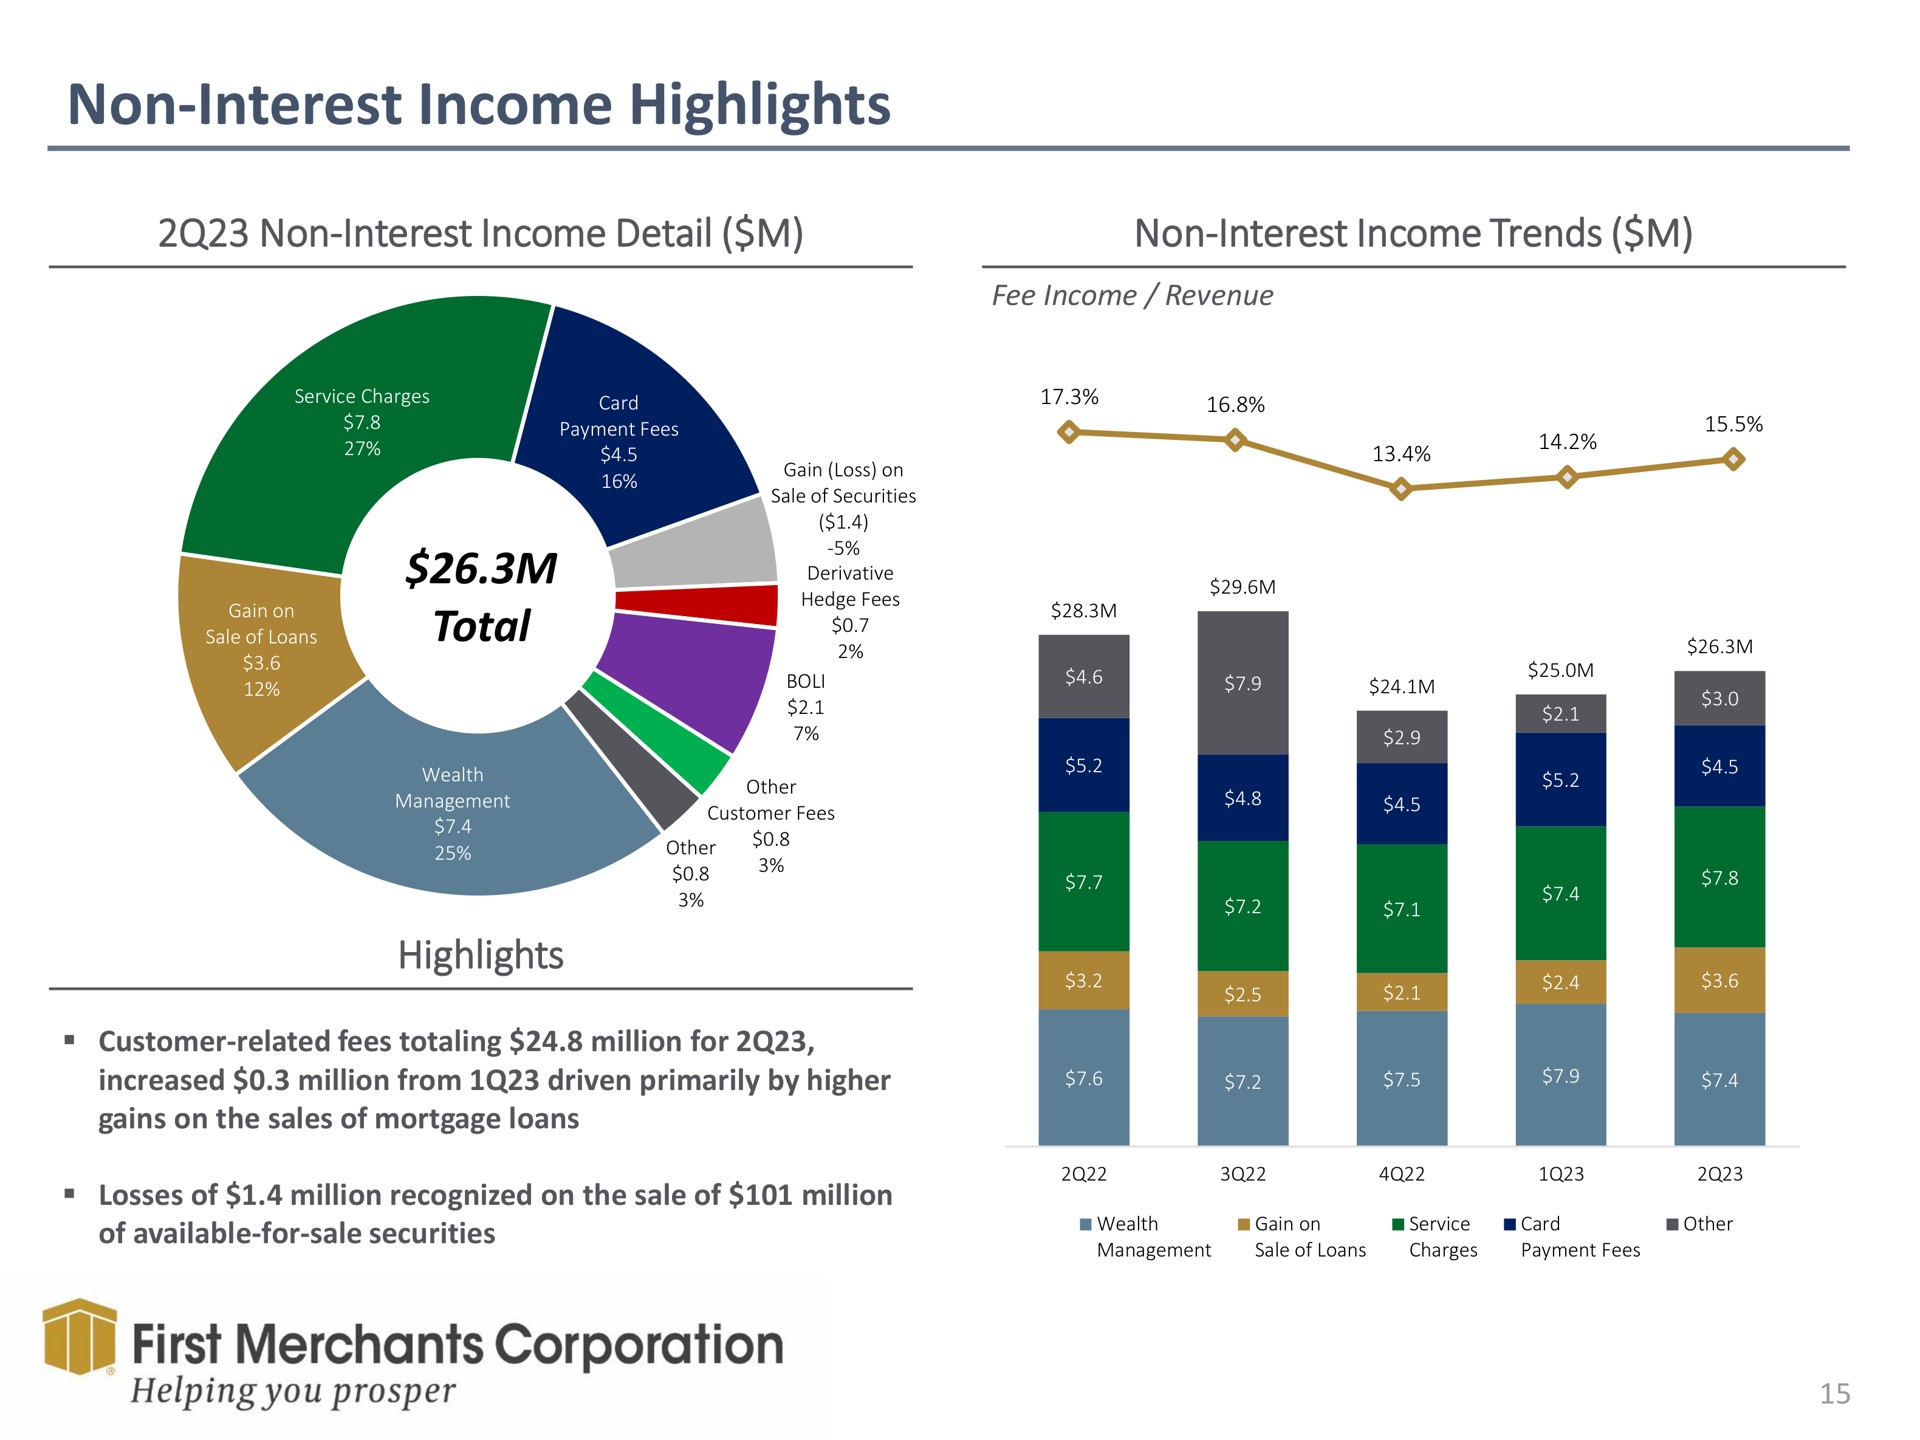 non interest income highlights total detail first merchants corporation helping you prosper trends | First Merchants